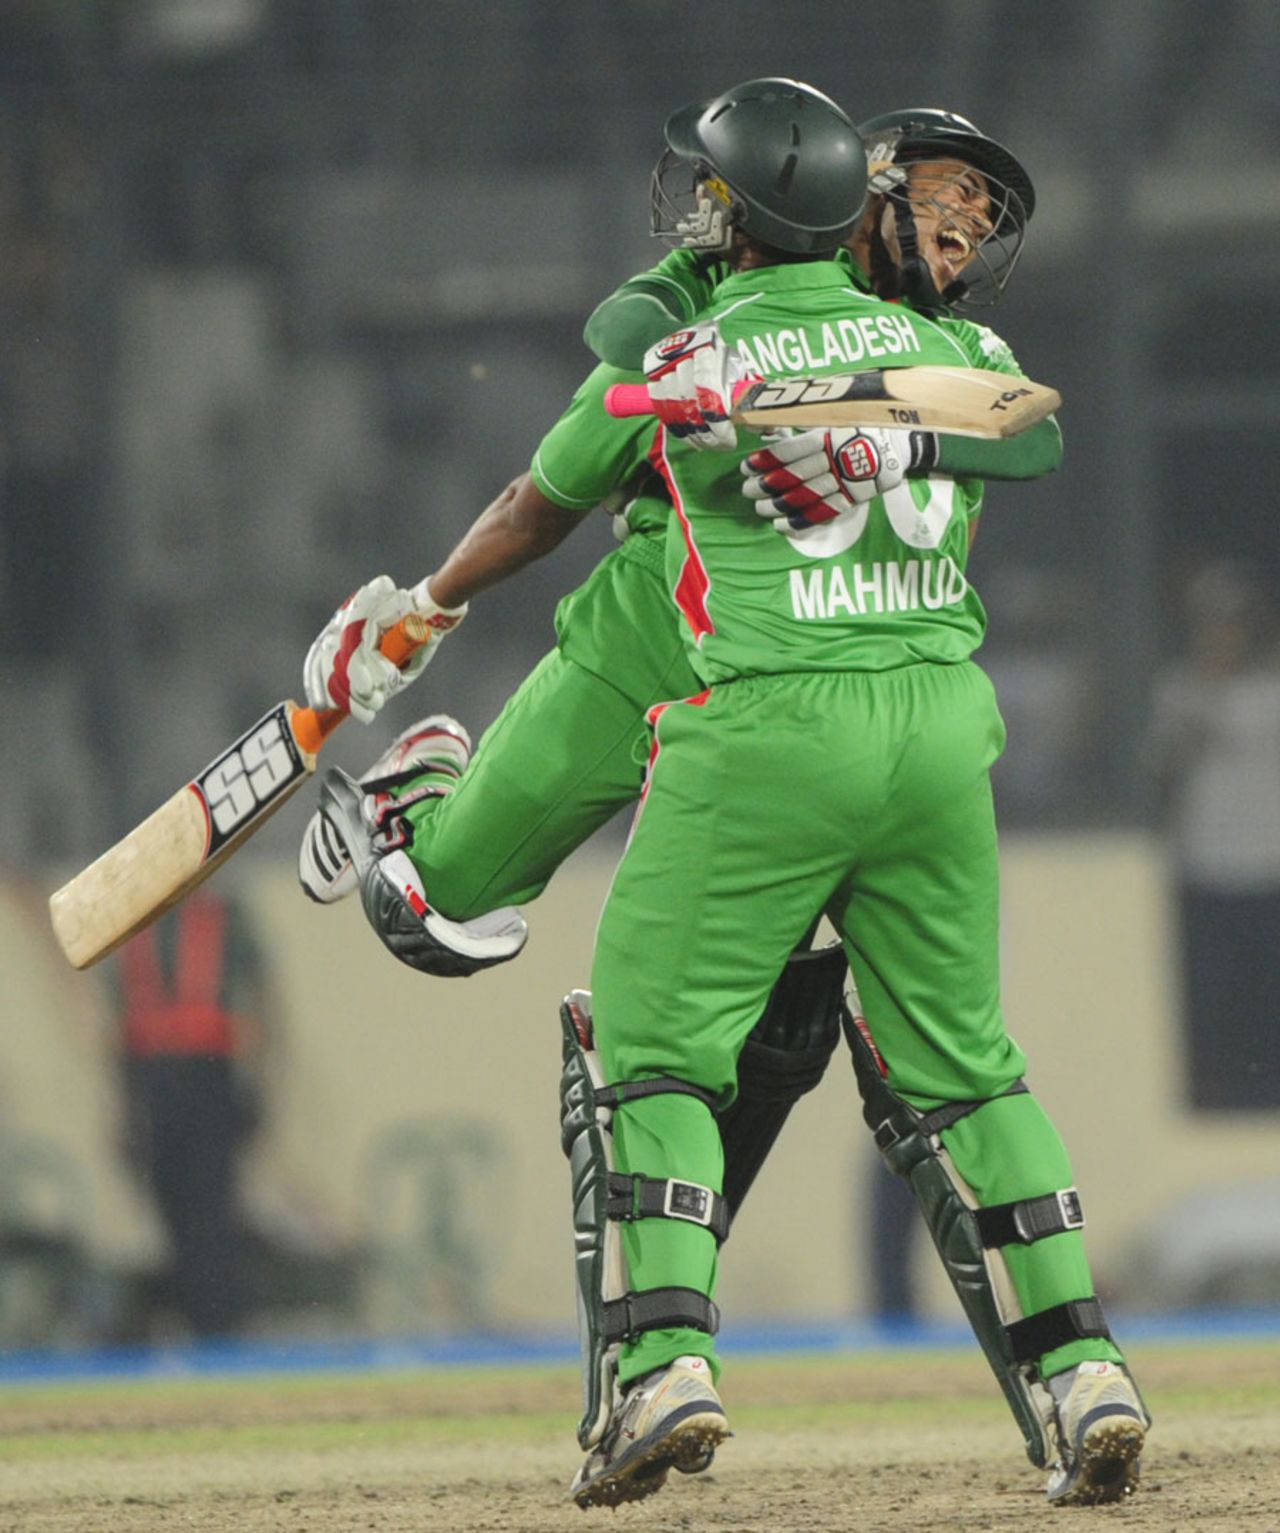 Mushfiqur Rahim jumps on Mahmudullah after Bangladesh's win, Bangladesh v India, Asia Cup, Mirpur, March 16, 2012